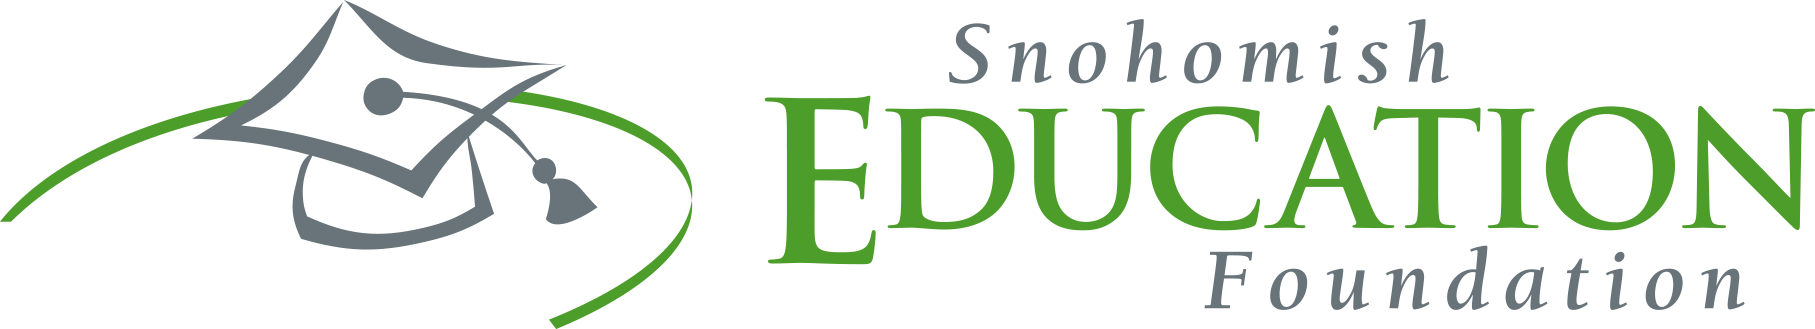 Snohomish Education Foundation